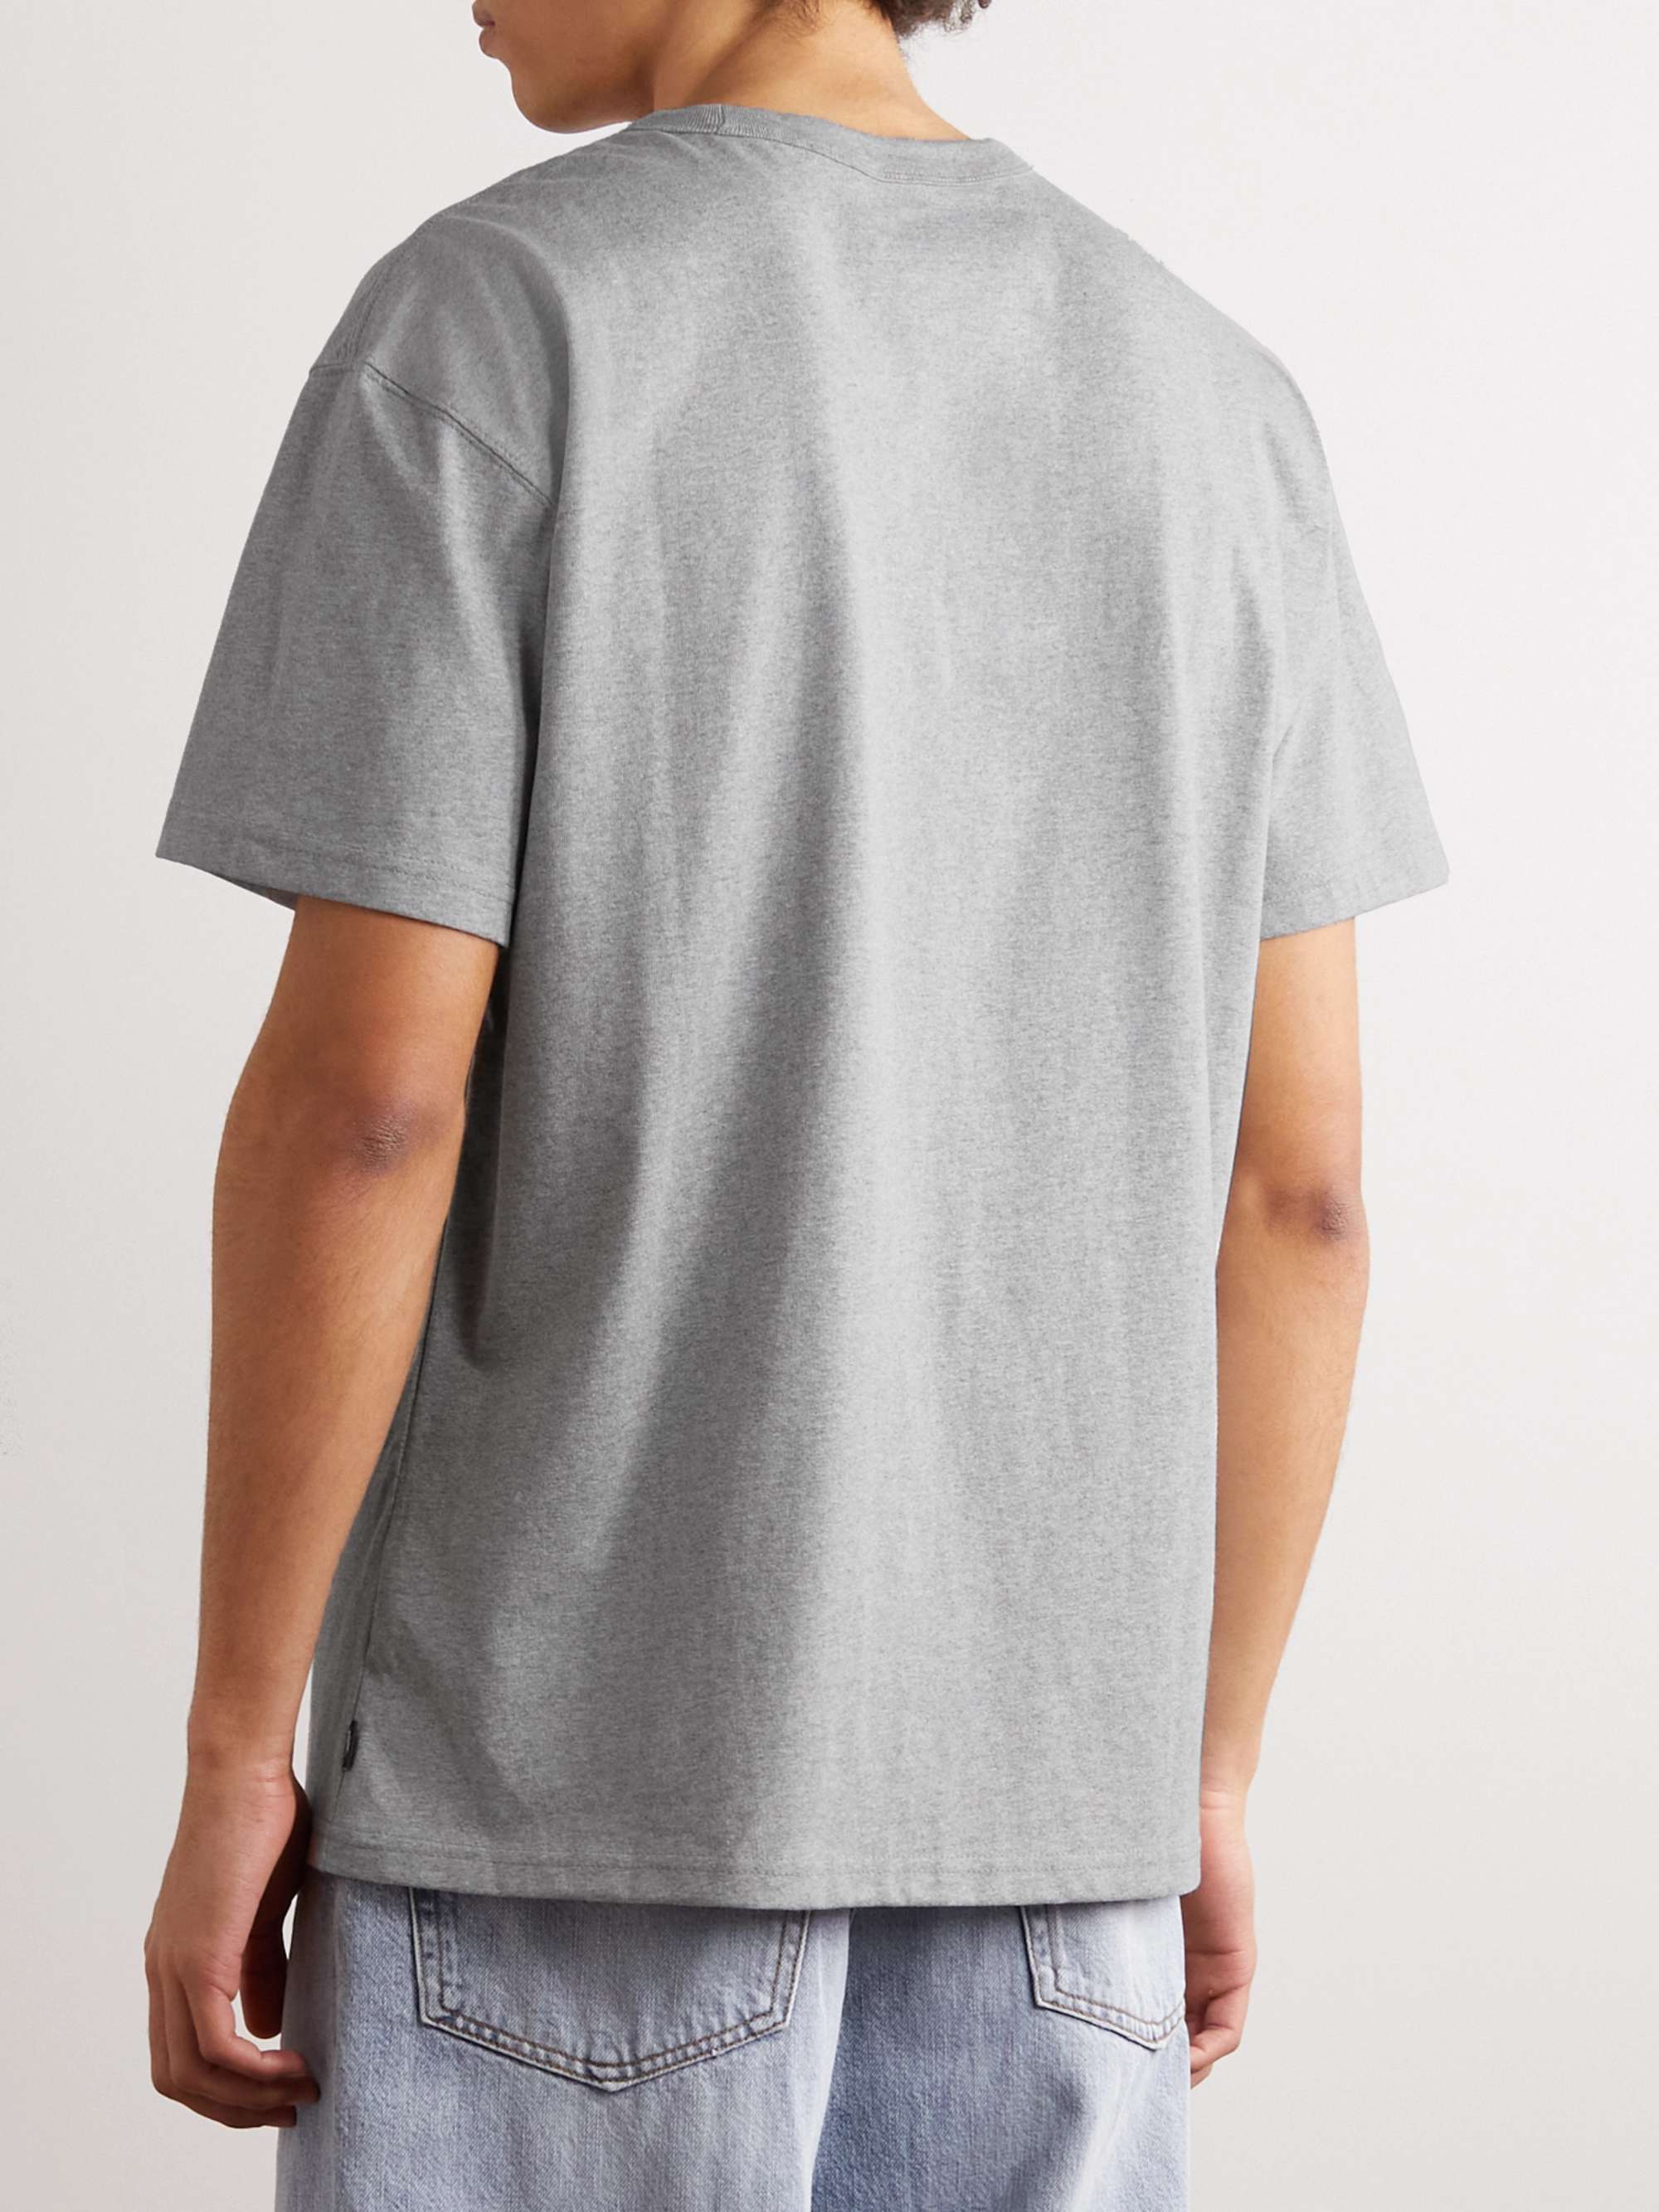 NIKE Premium Essentials Logo-Embroidered Cotton-Jersey T-Shirt